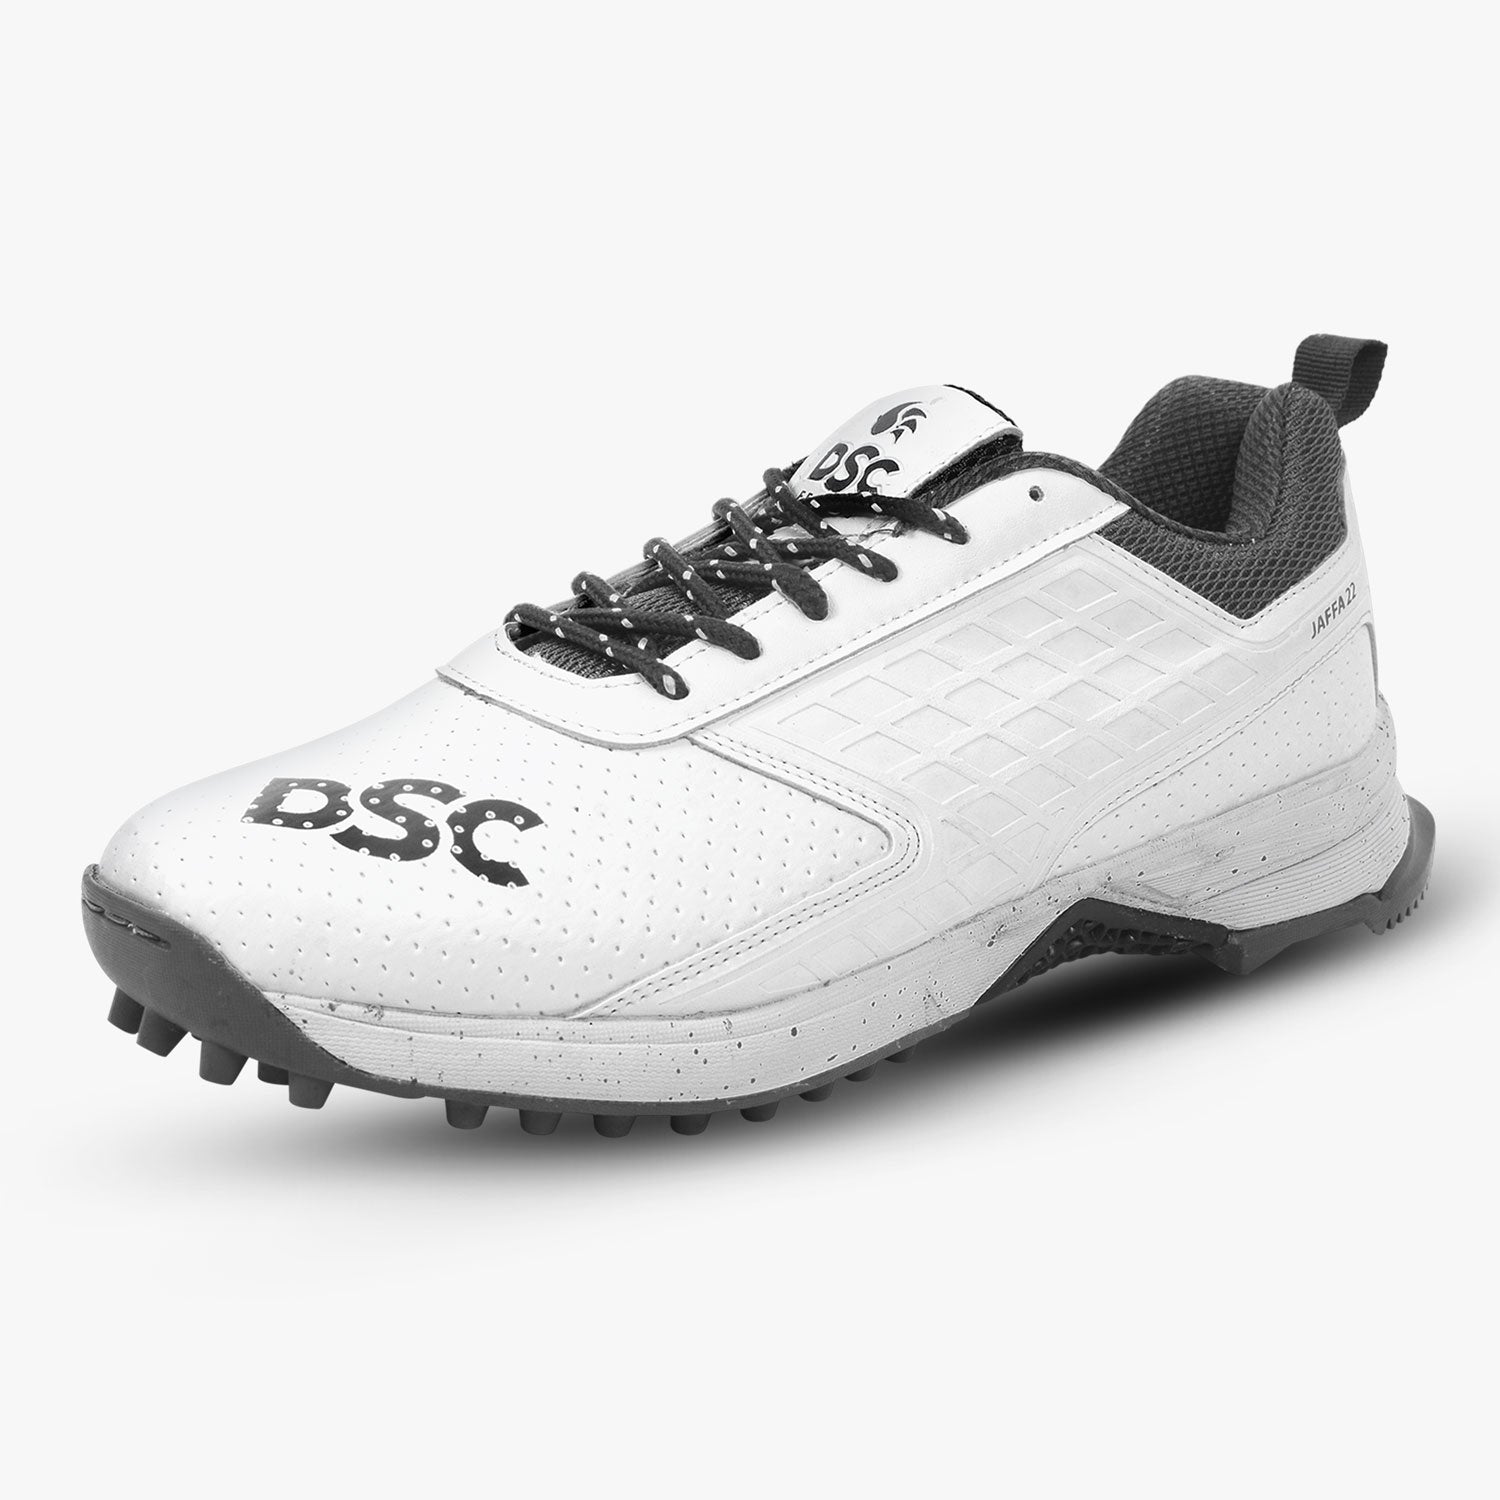 2024 DSC Jaffa 22 Cricket Shoes - White/Black